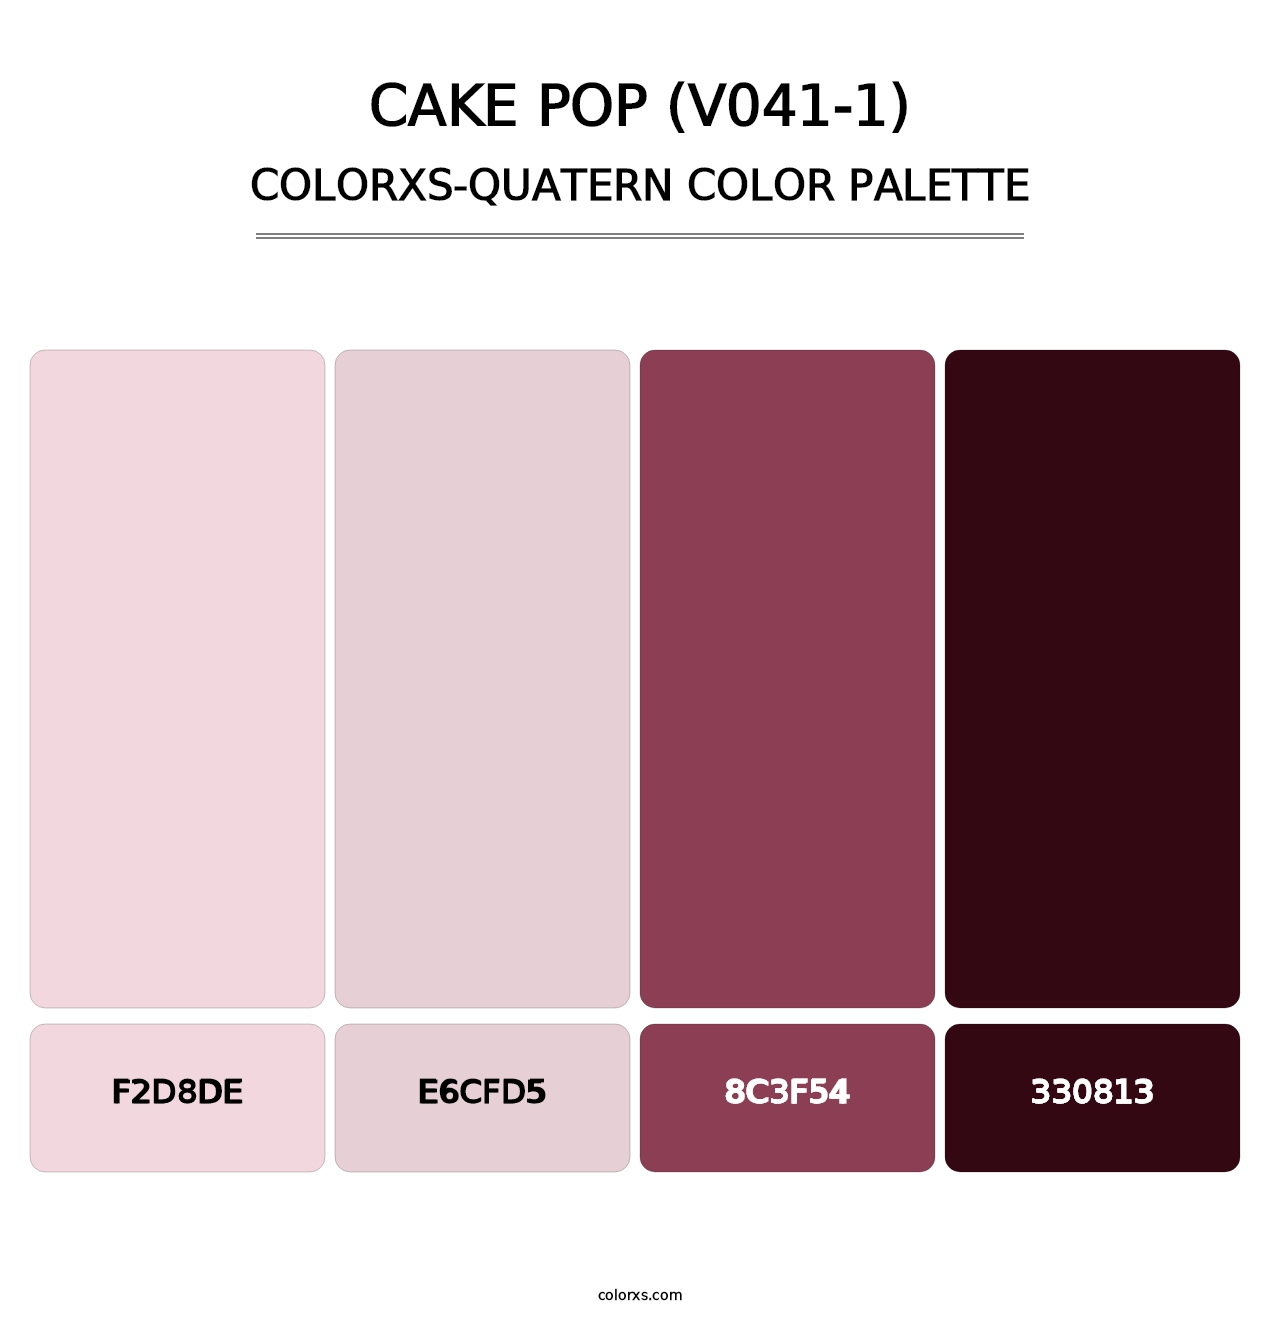 Cake Pop (V041-1) - Colorxs Quatern Palette